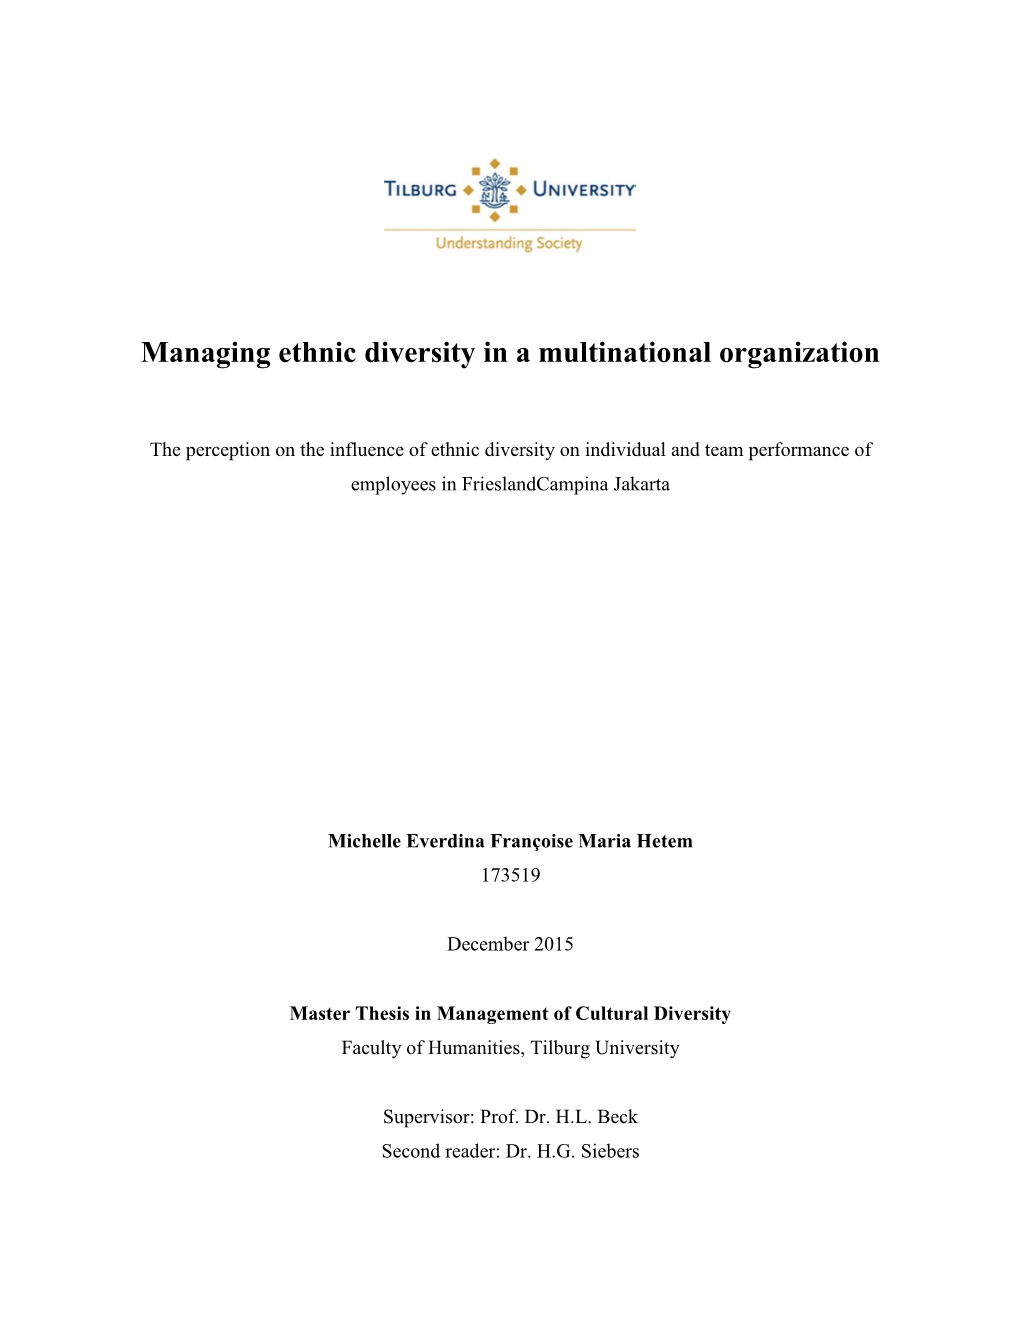 Managing Ethnic Diversity in a Multinational Organization